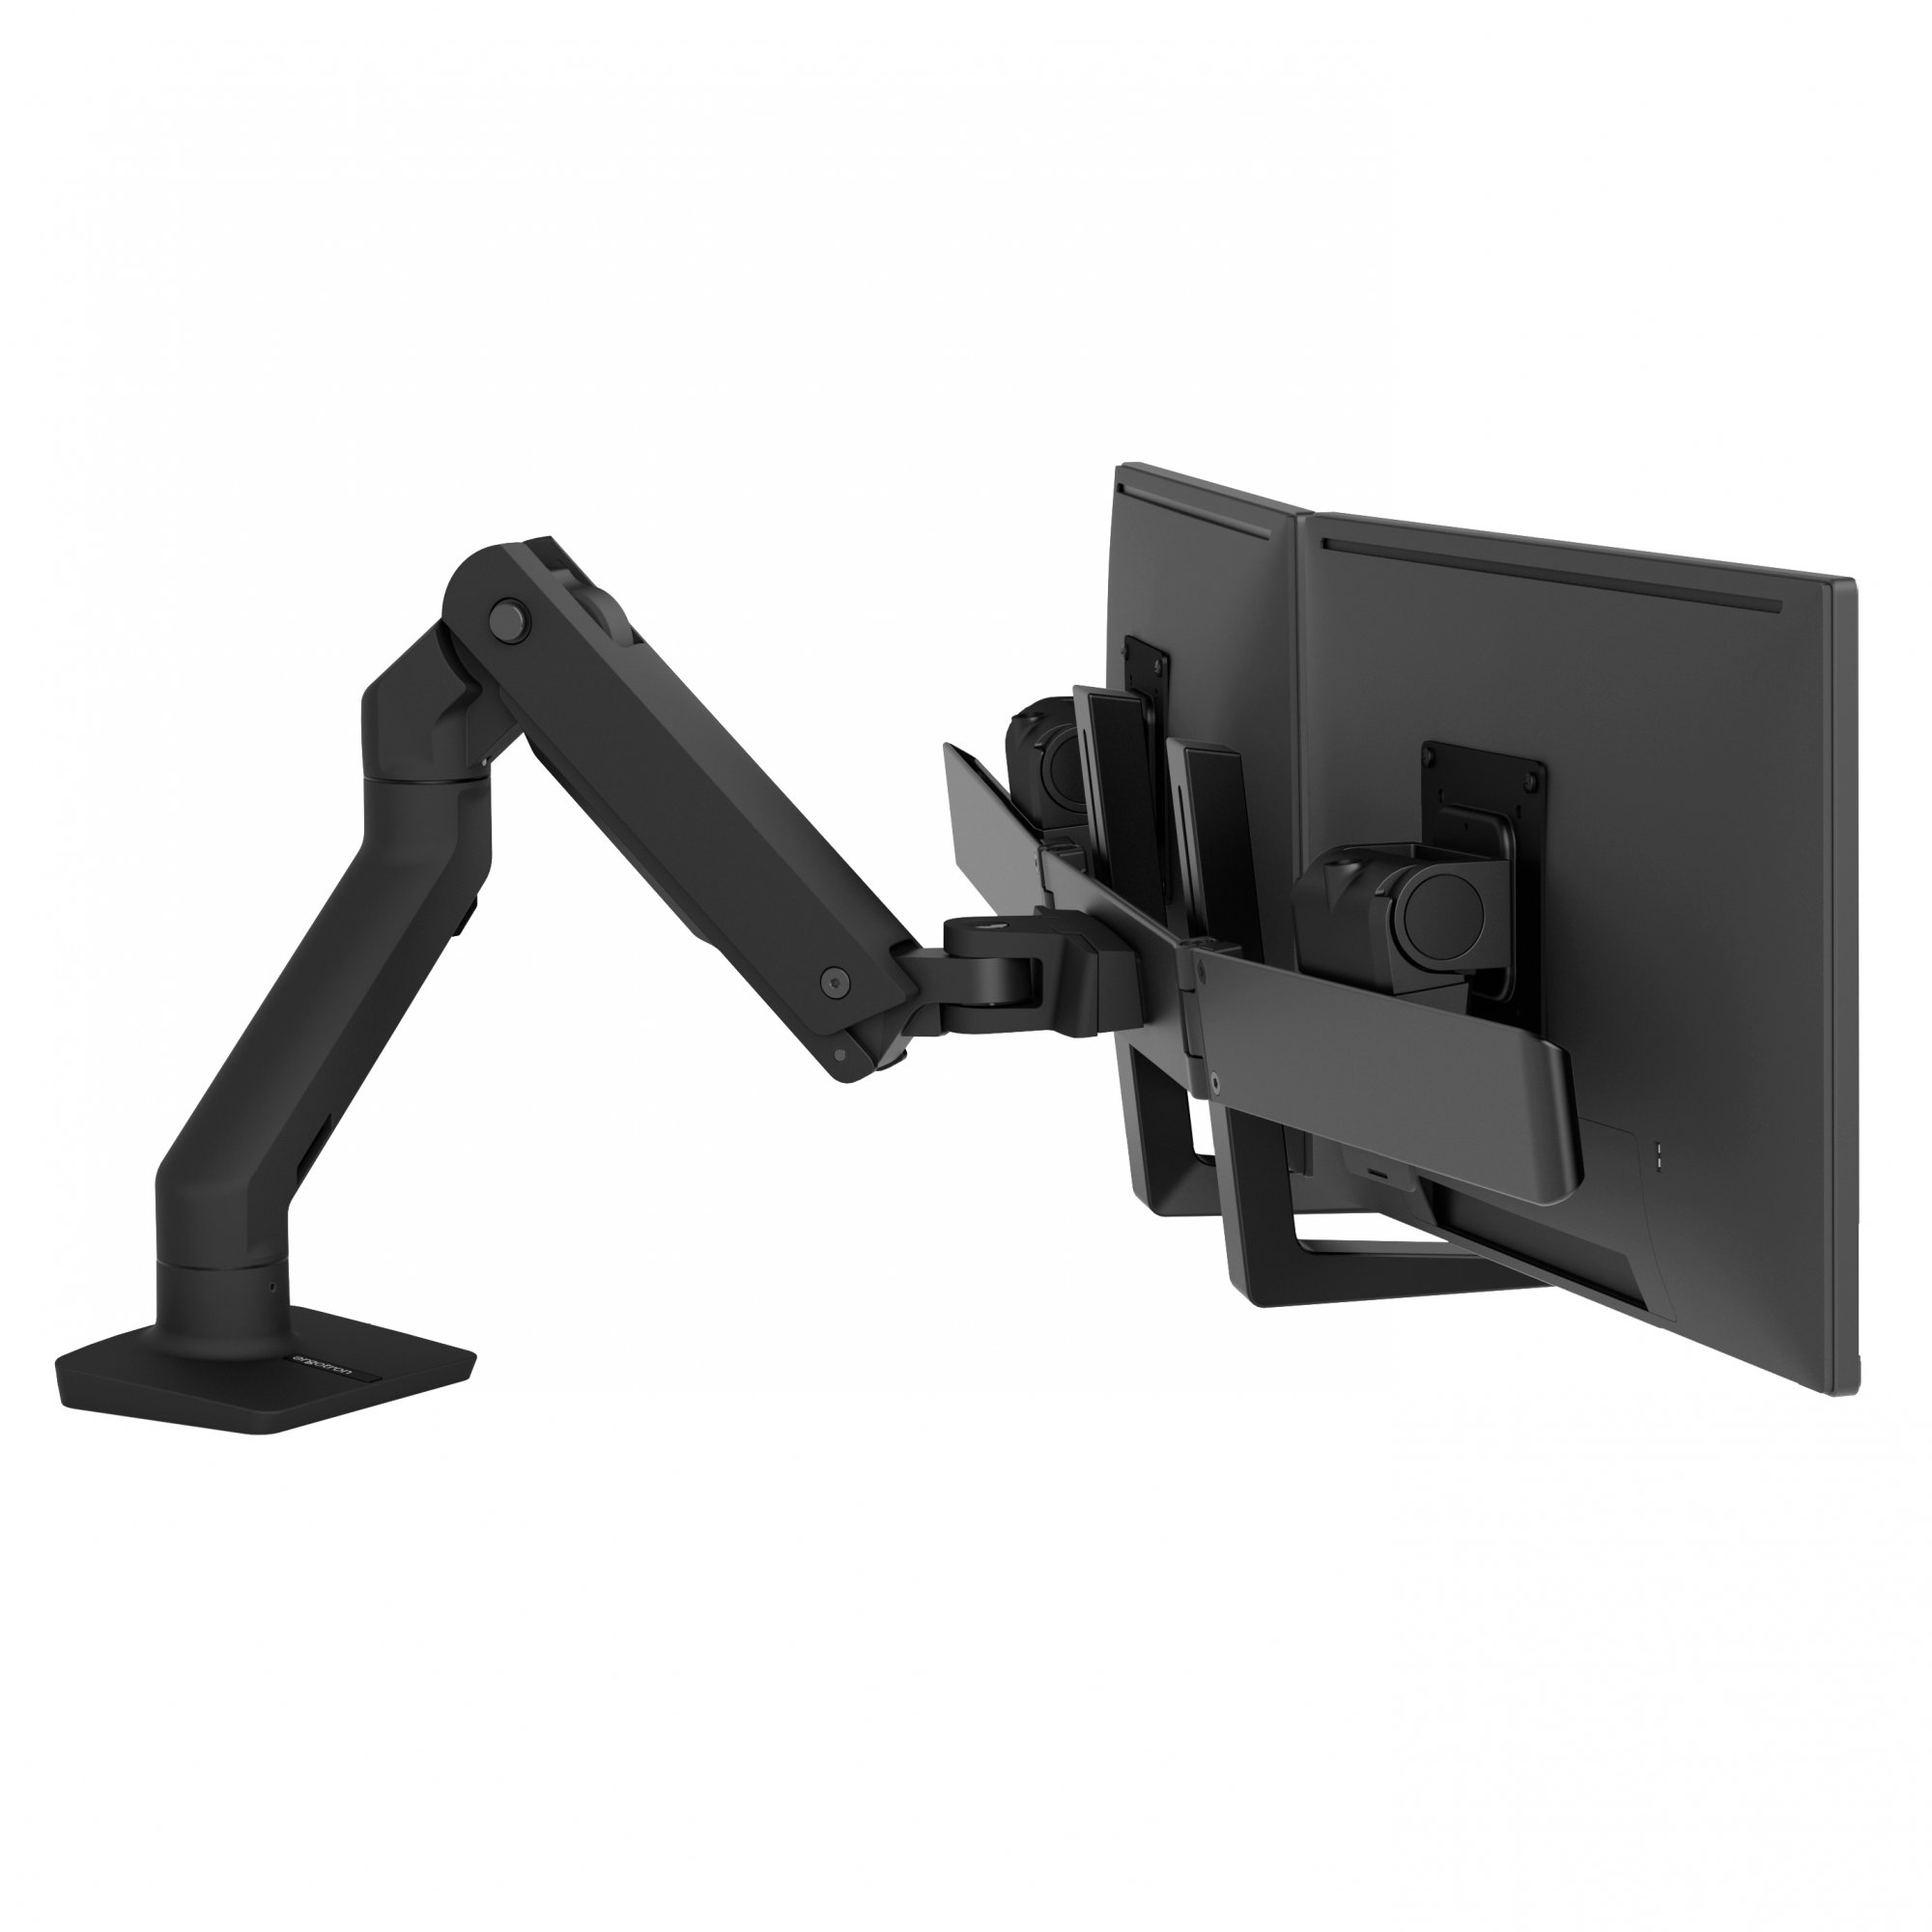 Ergotron 45-476-224 HX Desk Mount Dual Monitor Arm (matte black)